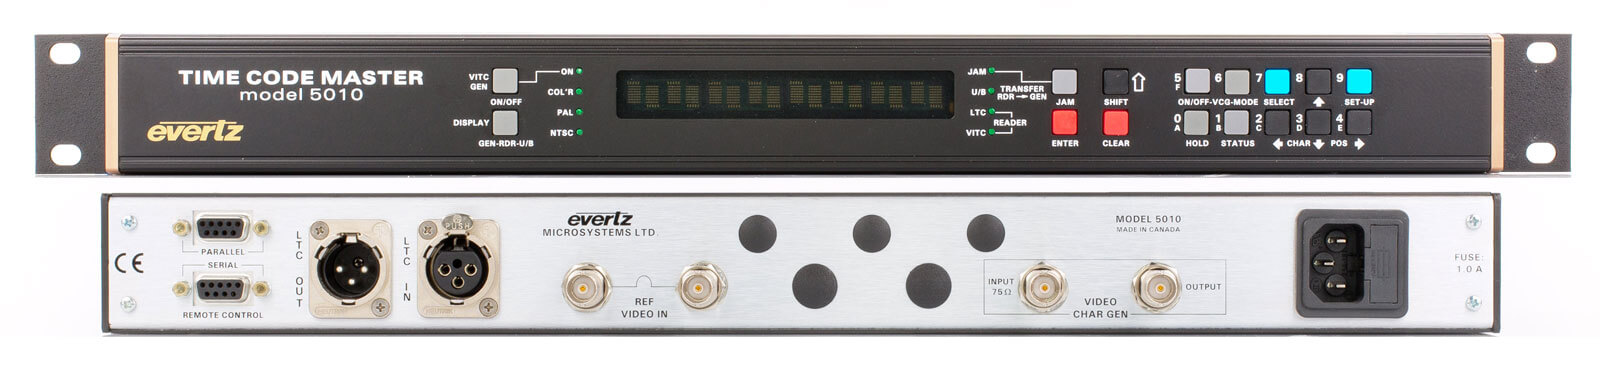 Evertz 5010-VITC Avid Media Recorder *New Unused* 